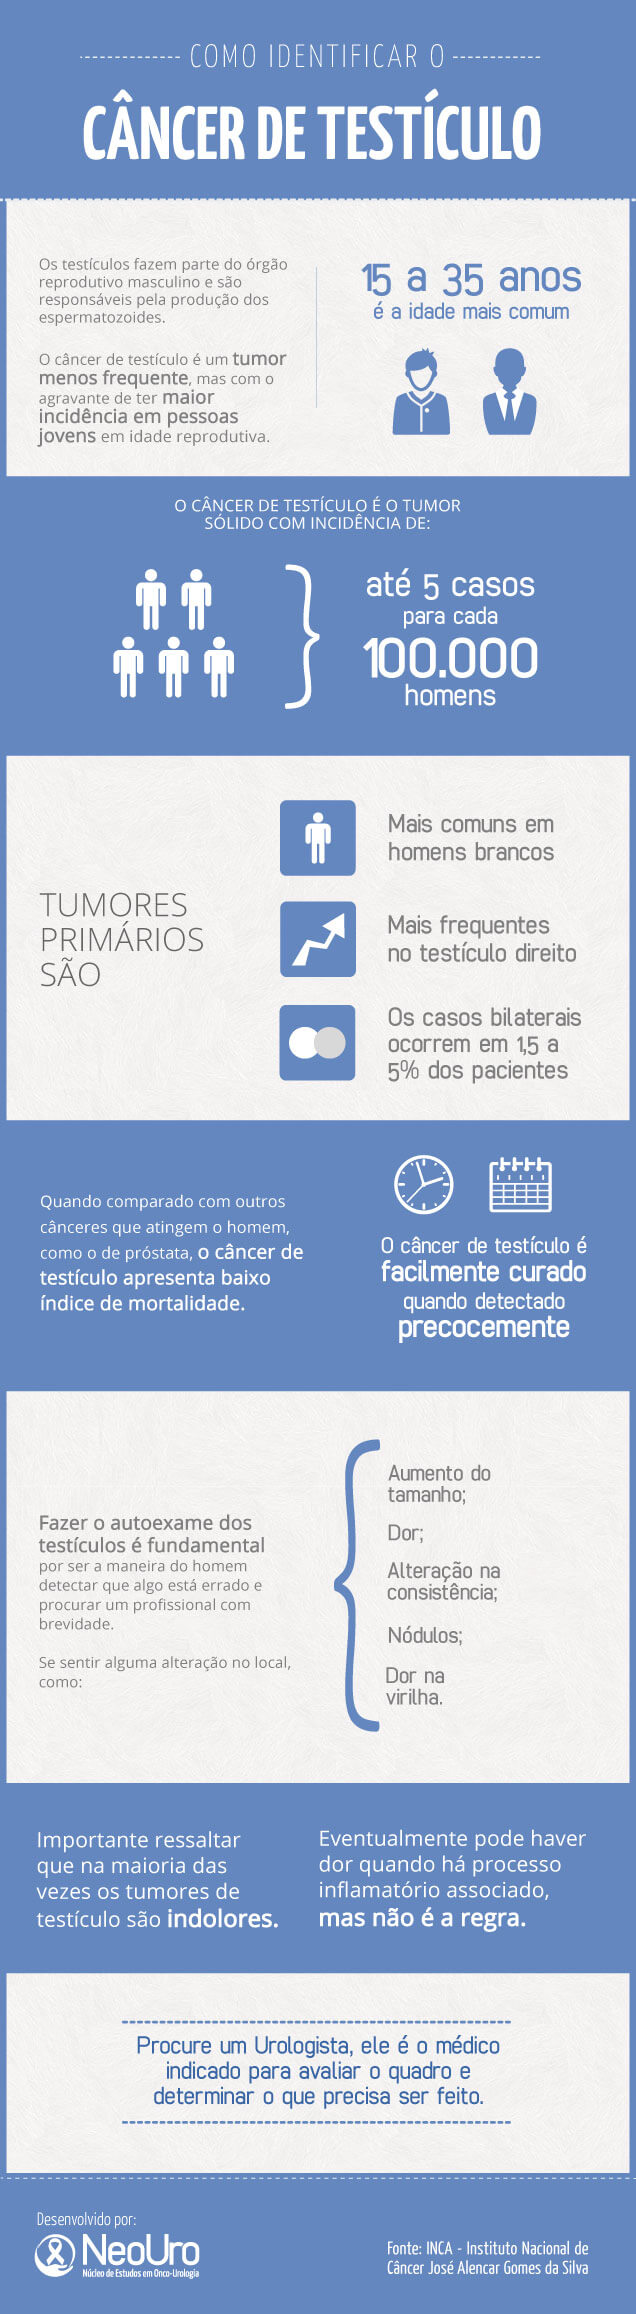 infografico-cancer-de-testiculo